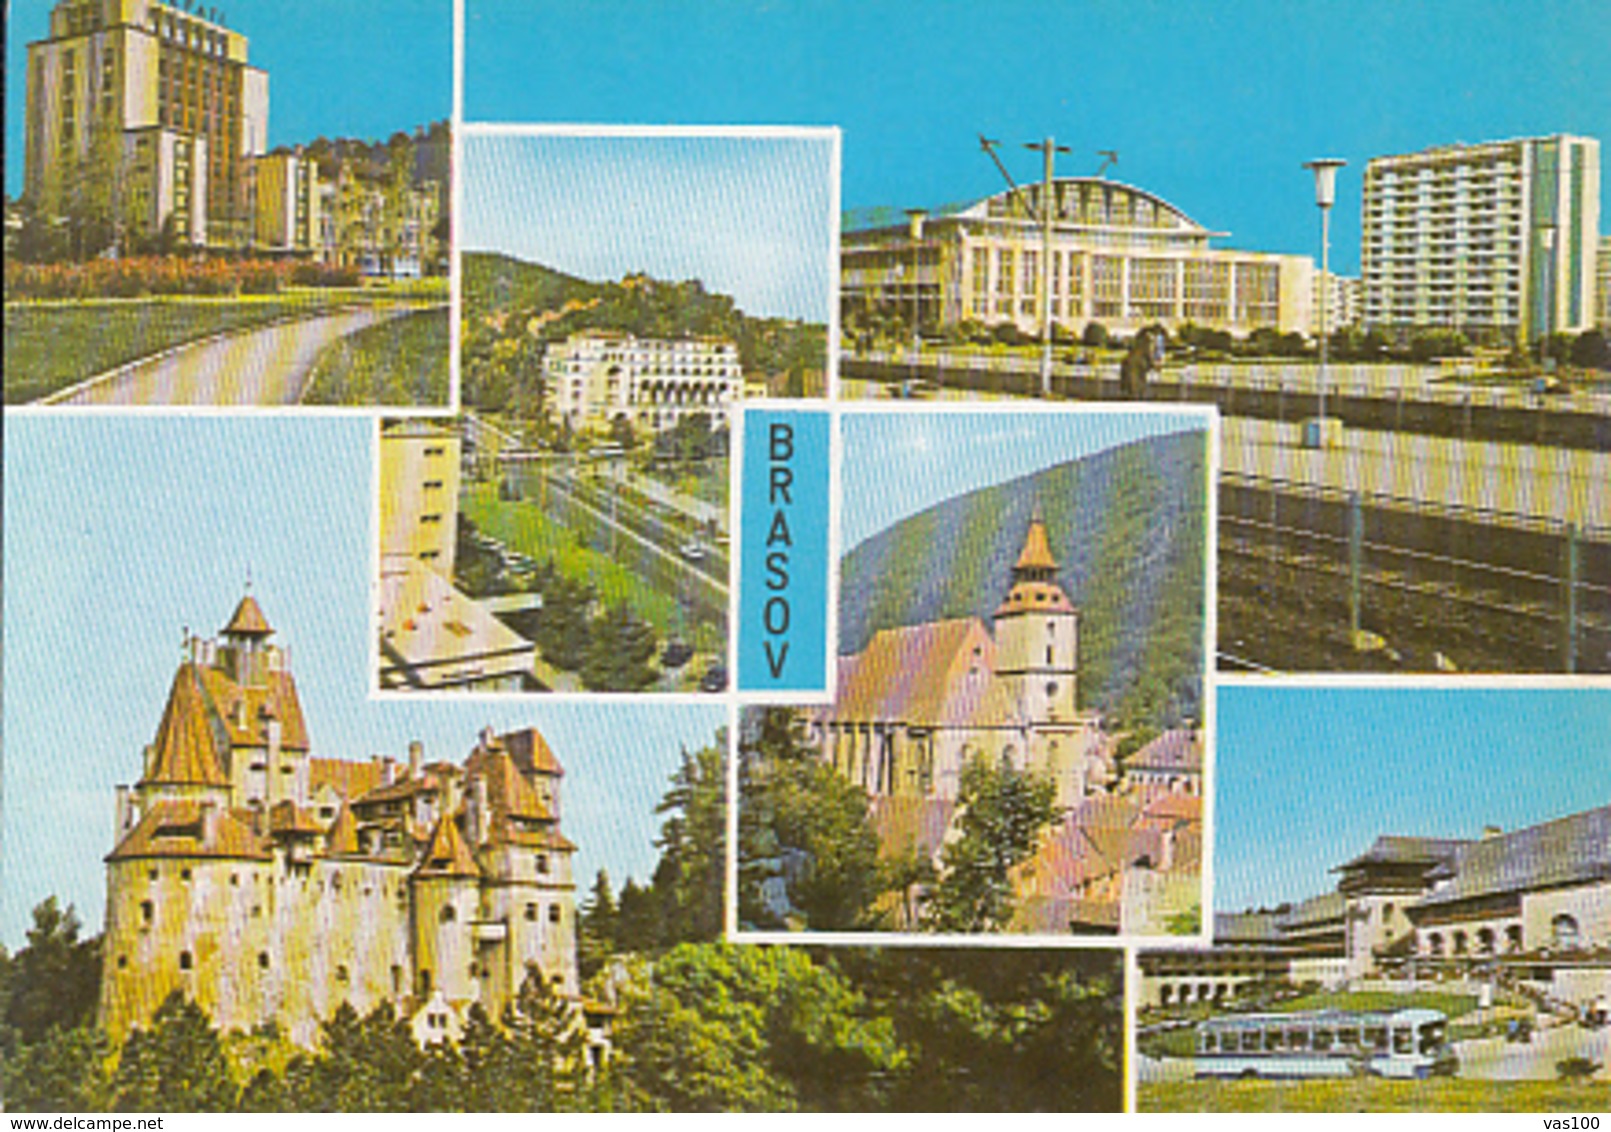 CPA BRASOV- HOTEL, ARMY CLUB, RAILWAY STATION, BLACK CHURCH, BRAN CASTLE, POIANA BRASOV HOTEL, BUSS - Romania